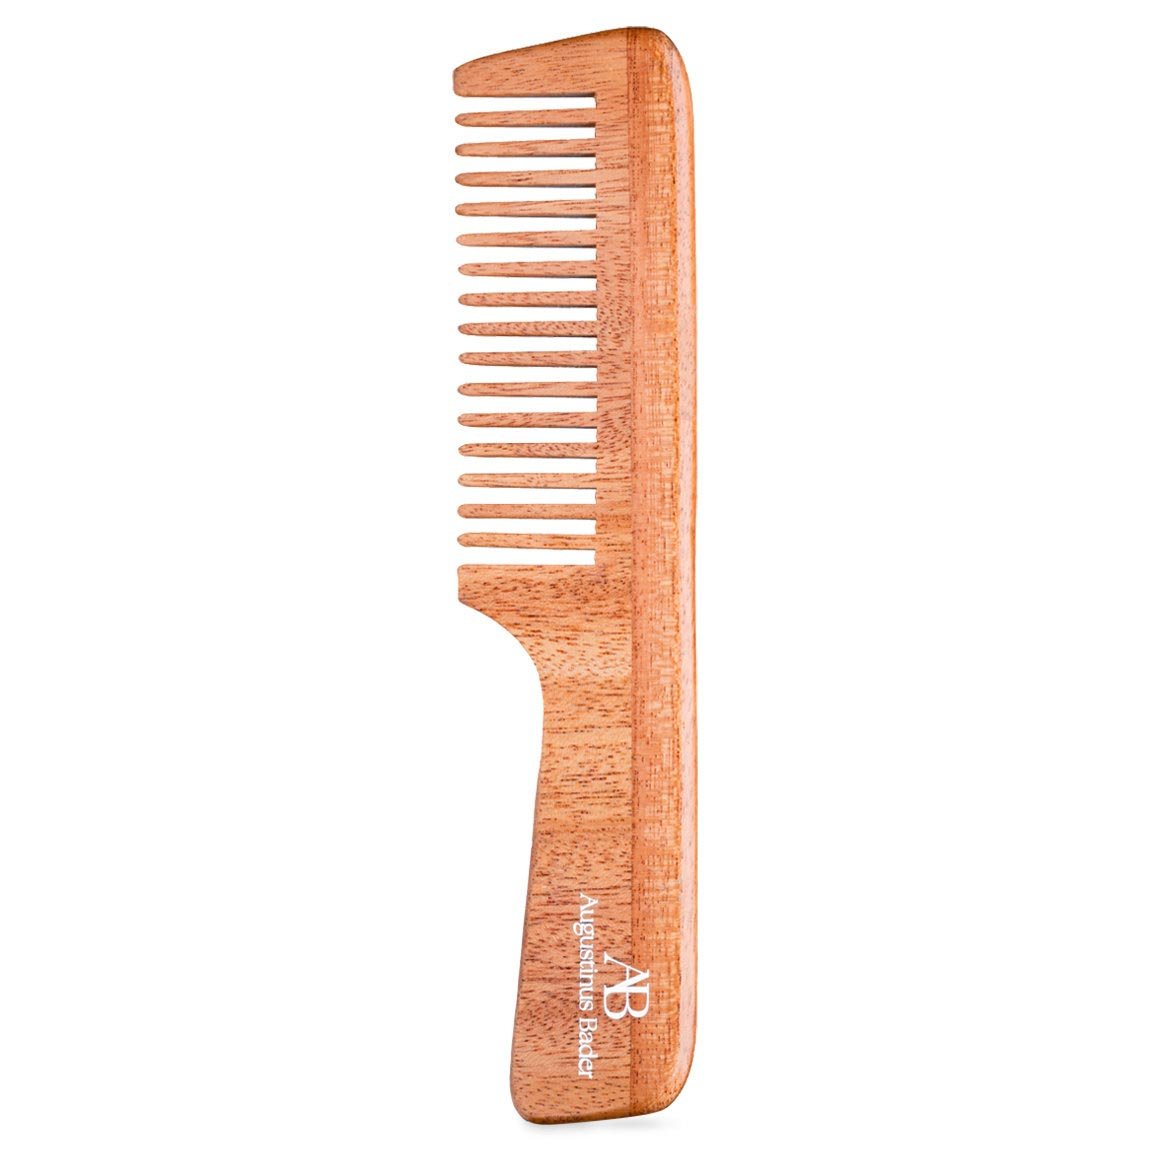 Shop Augustinus Bader's The Neem Comb on Beautylish.com